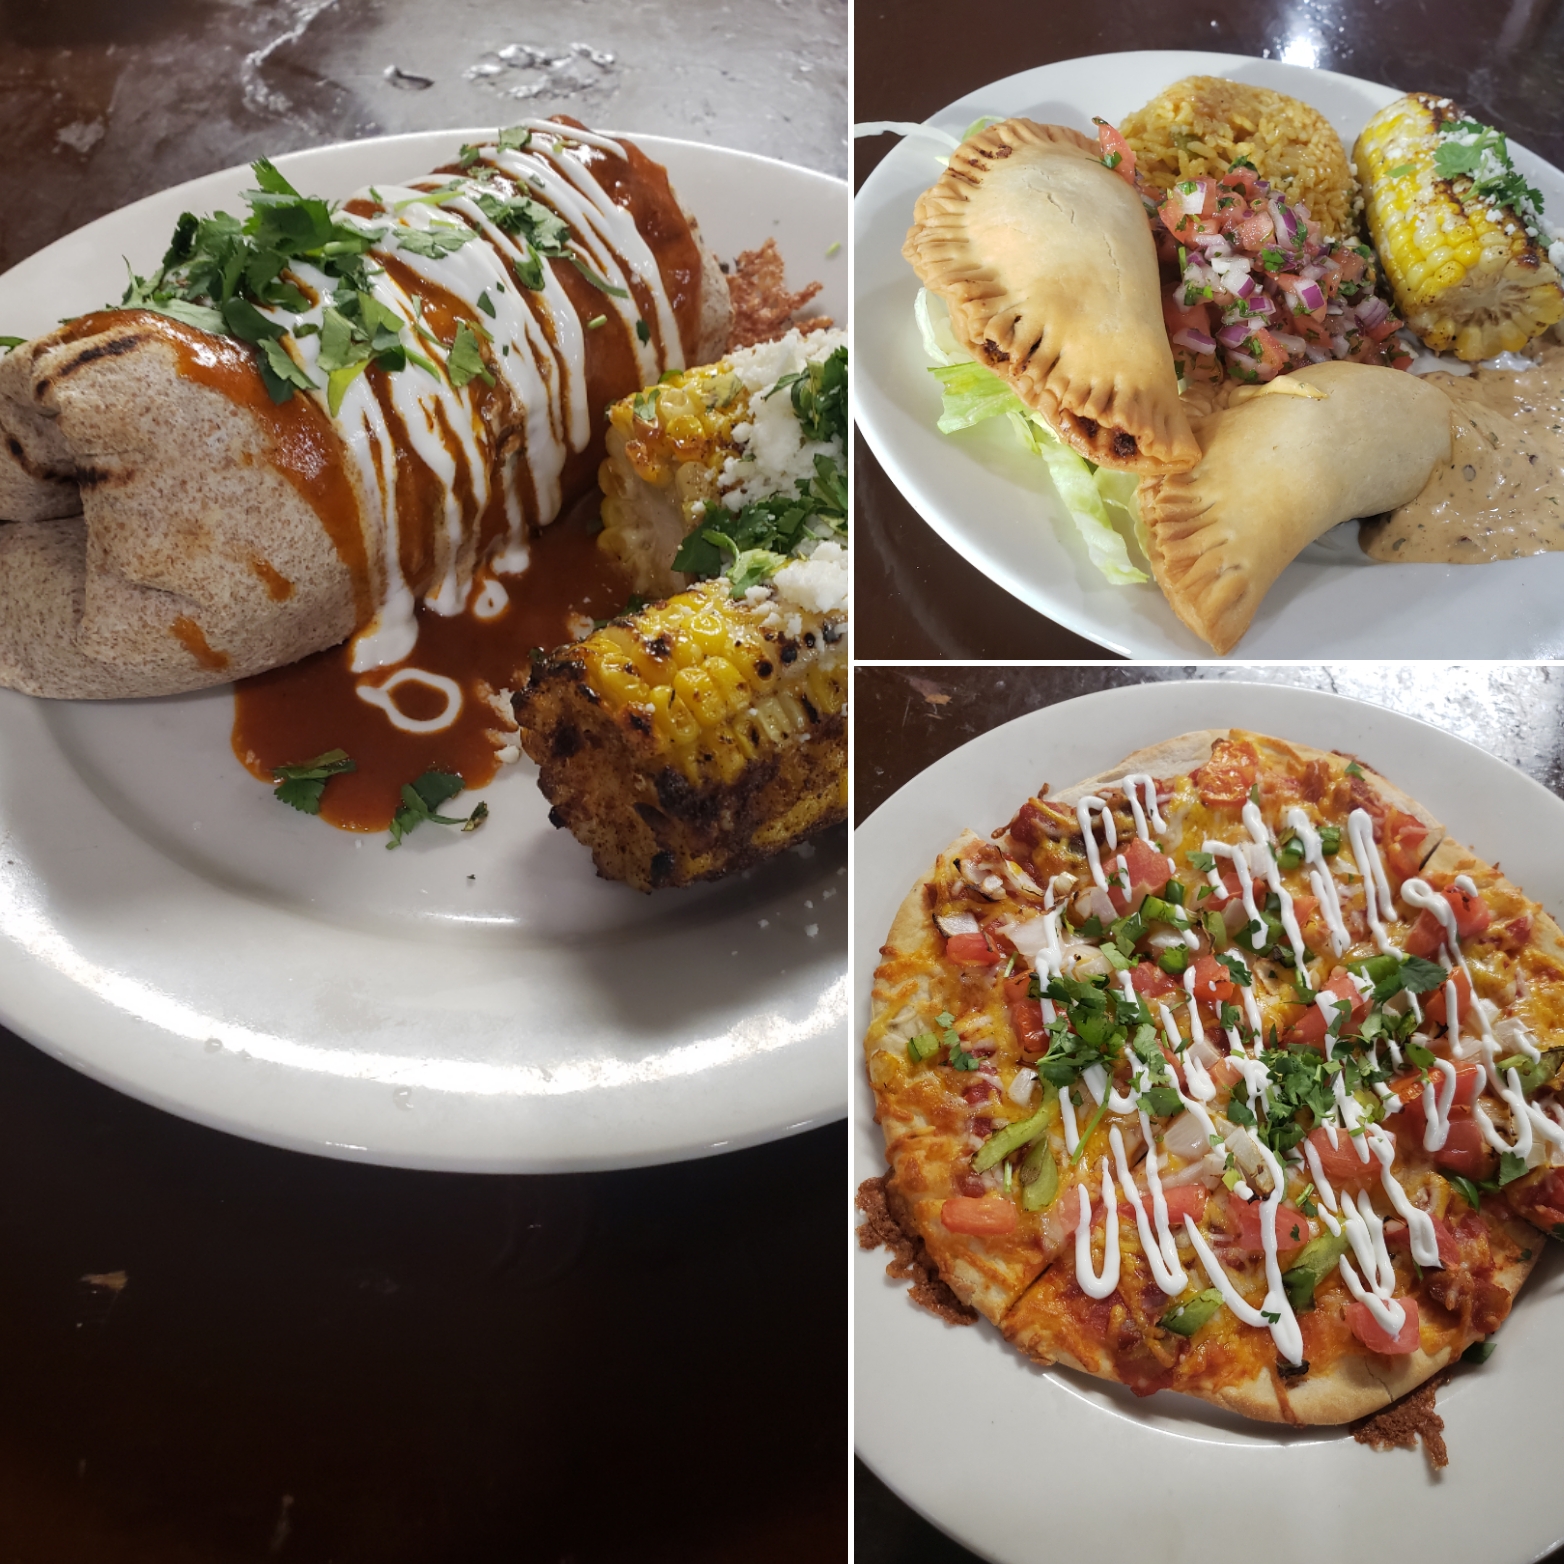 Image of three plates of food. Burrito, Pizza, and Empanadas. 